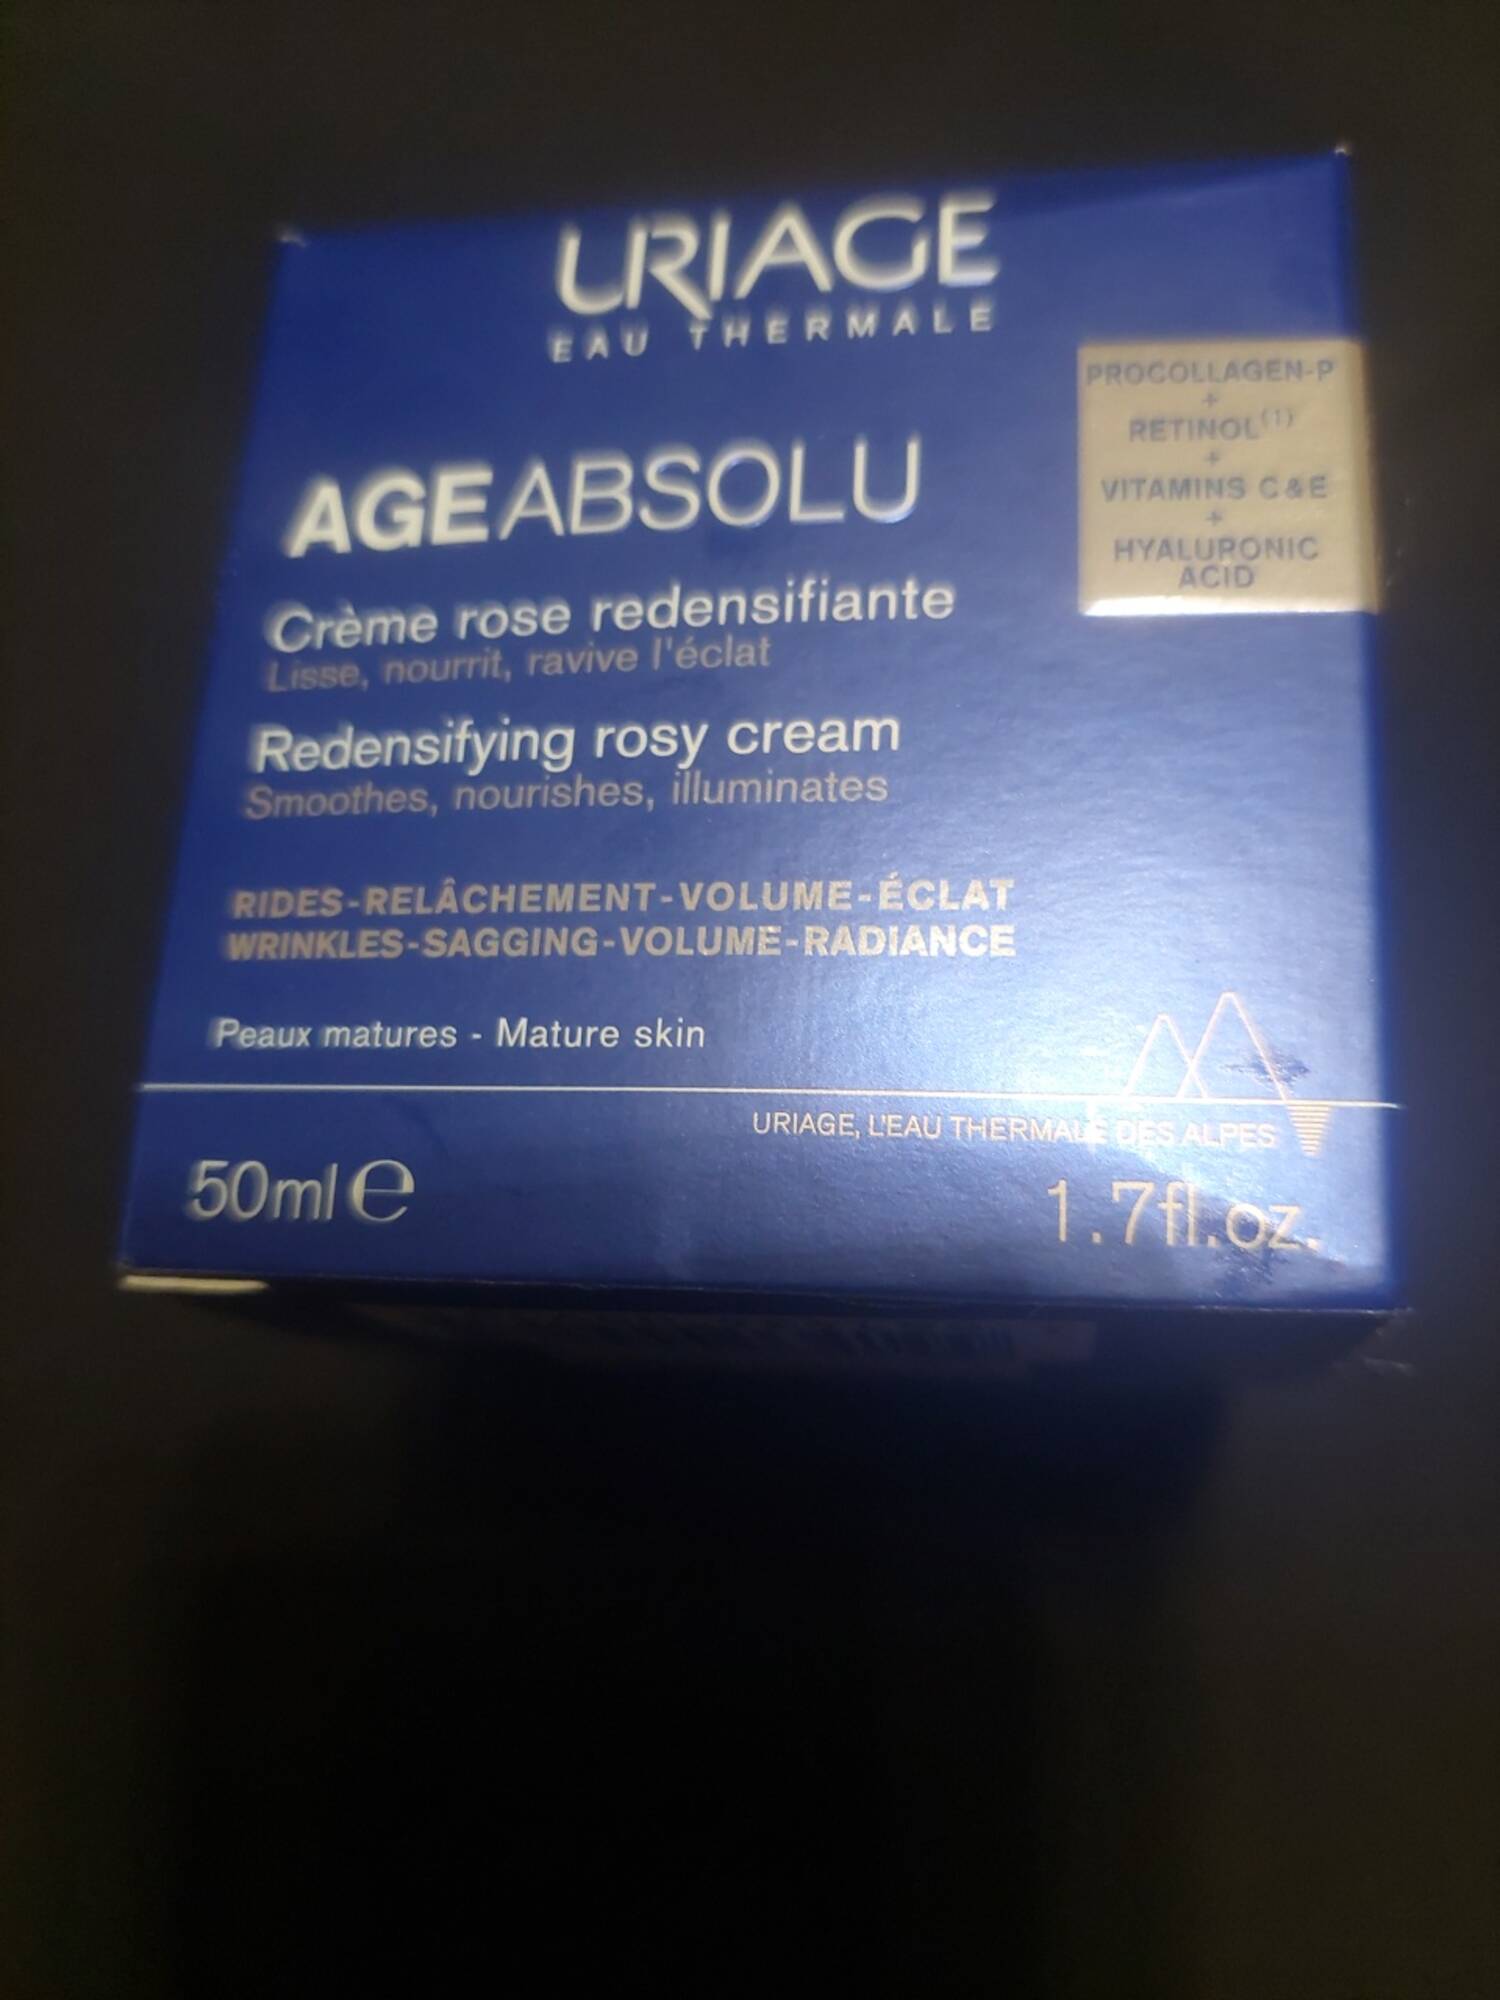 URIAGE - Age Absolu - Crème rose redensifiante